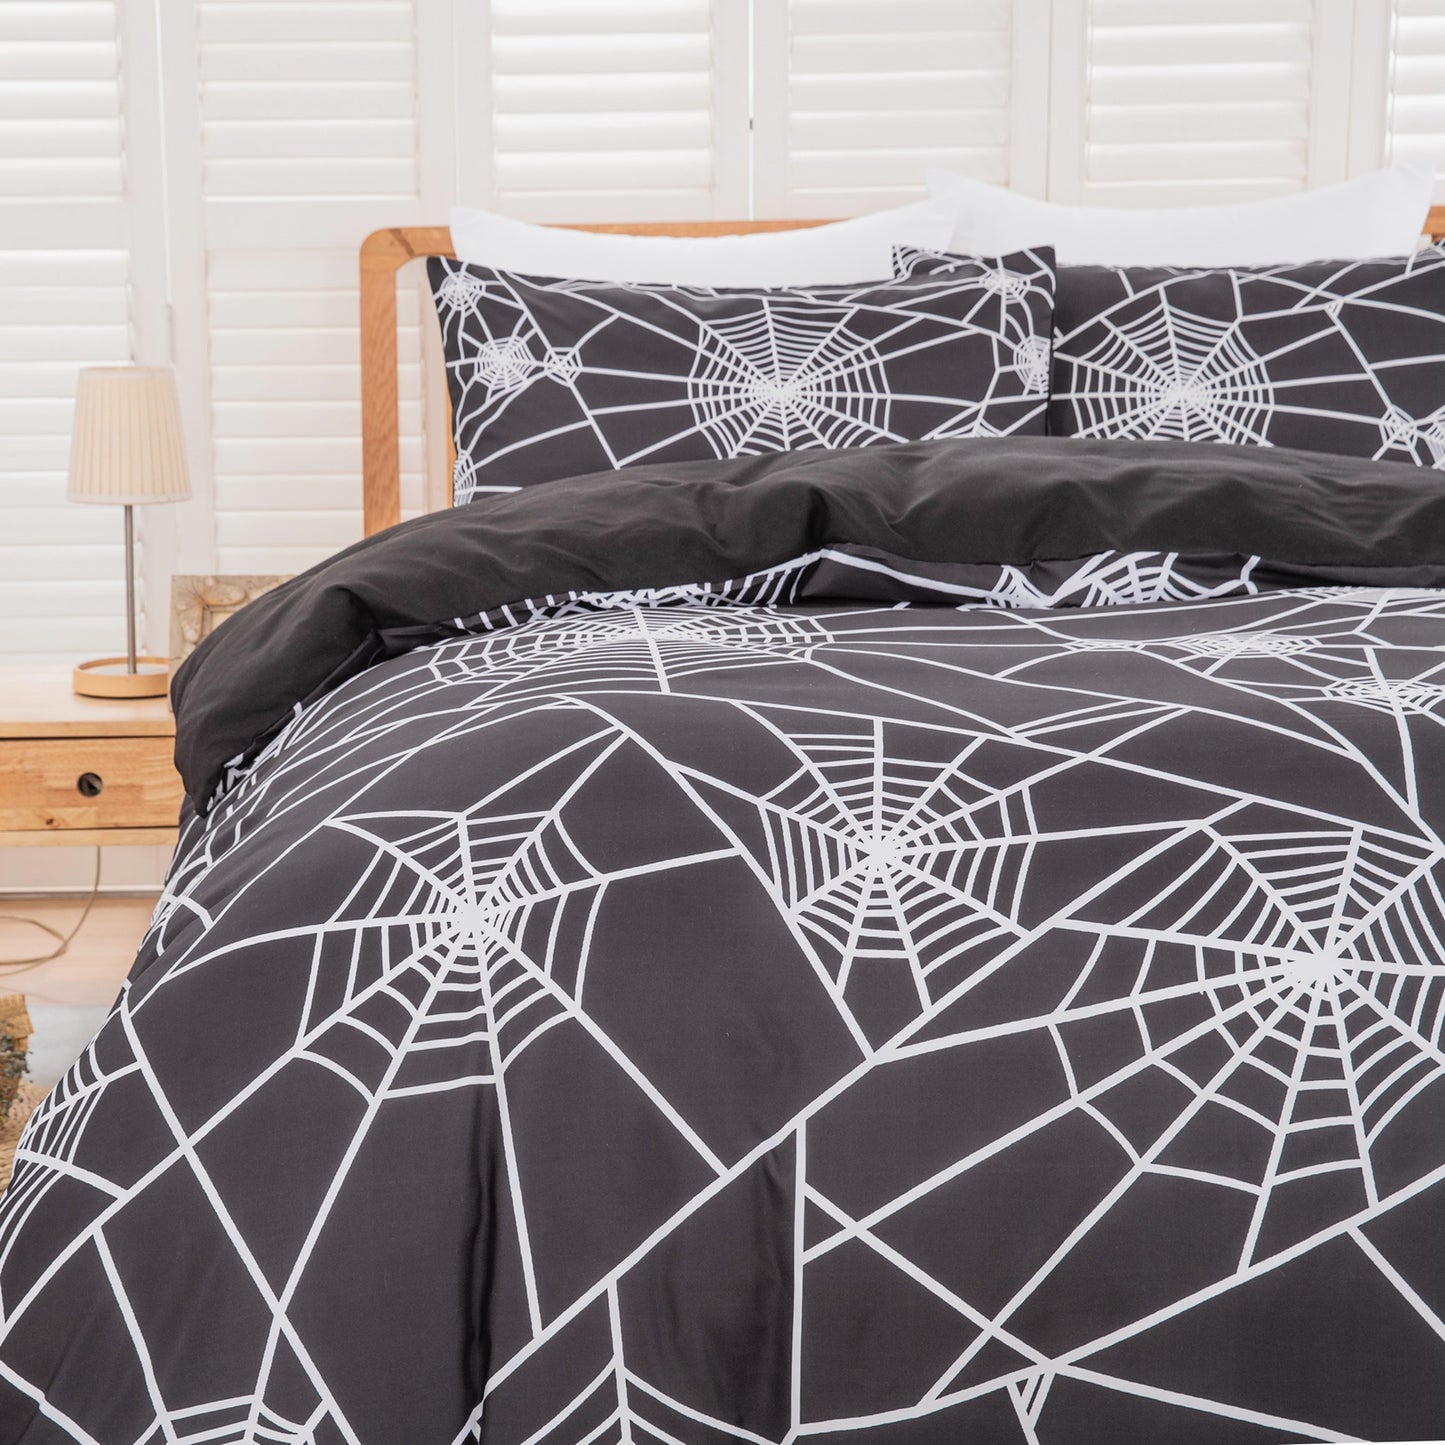 WONGS BEDDING Spider web Duvet cover set Bedding Bedroom set